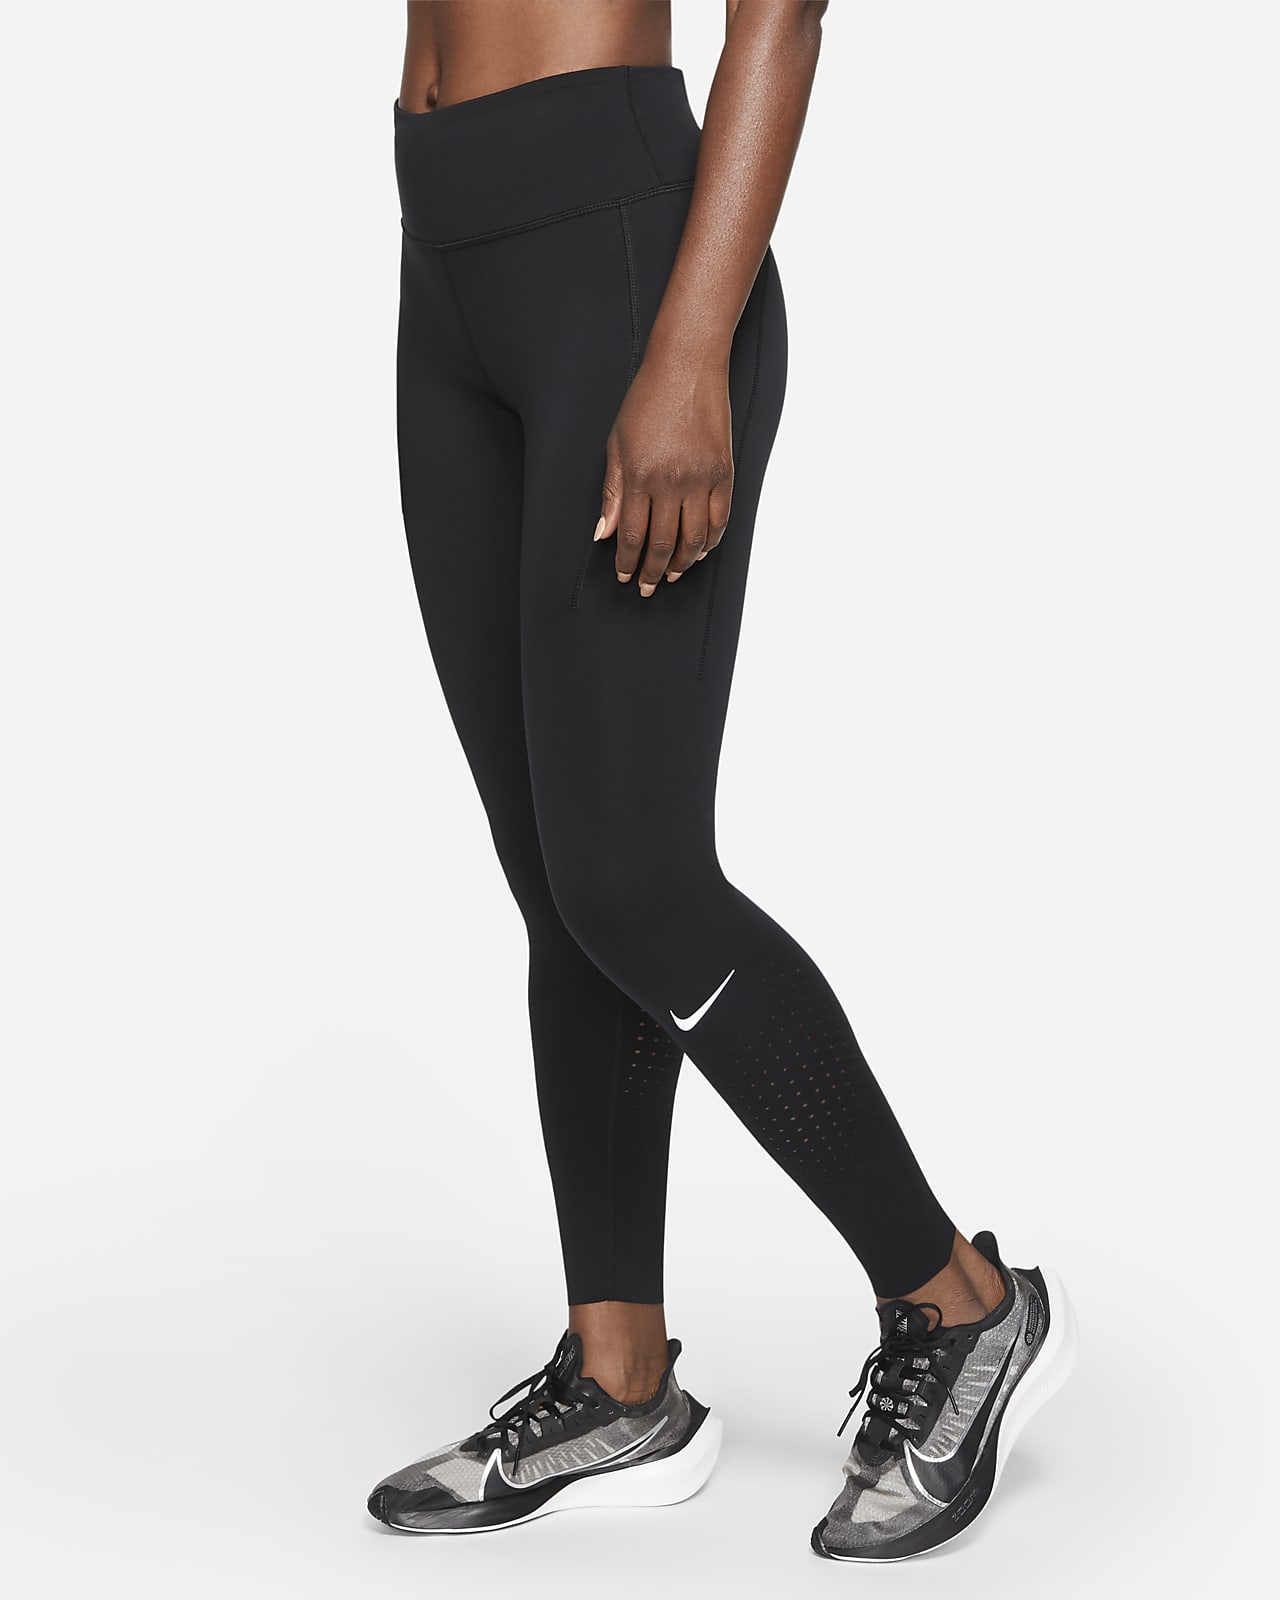 Las mejores ofertas en Leggings gris Nike para mujeres